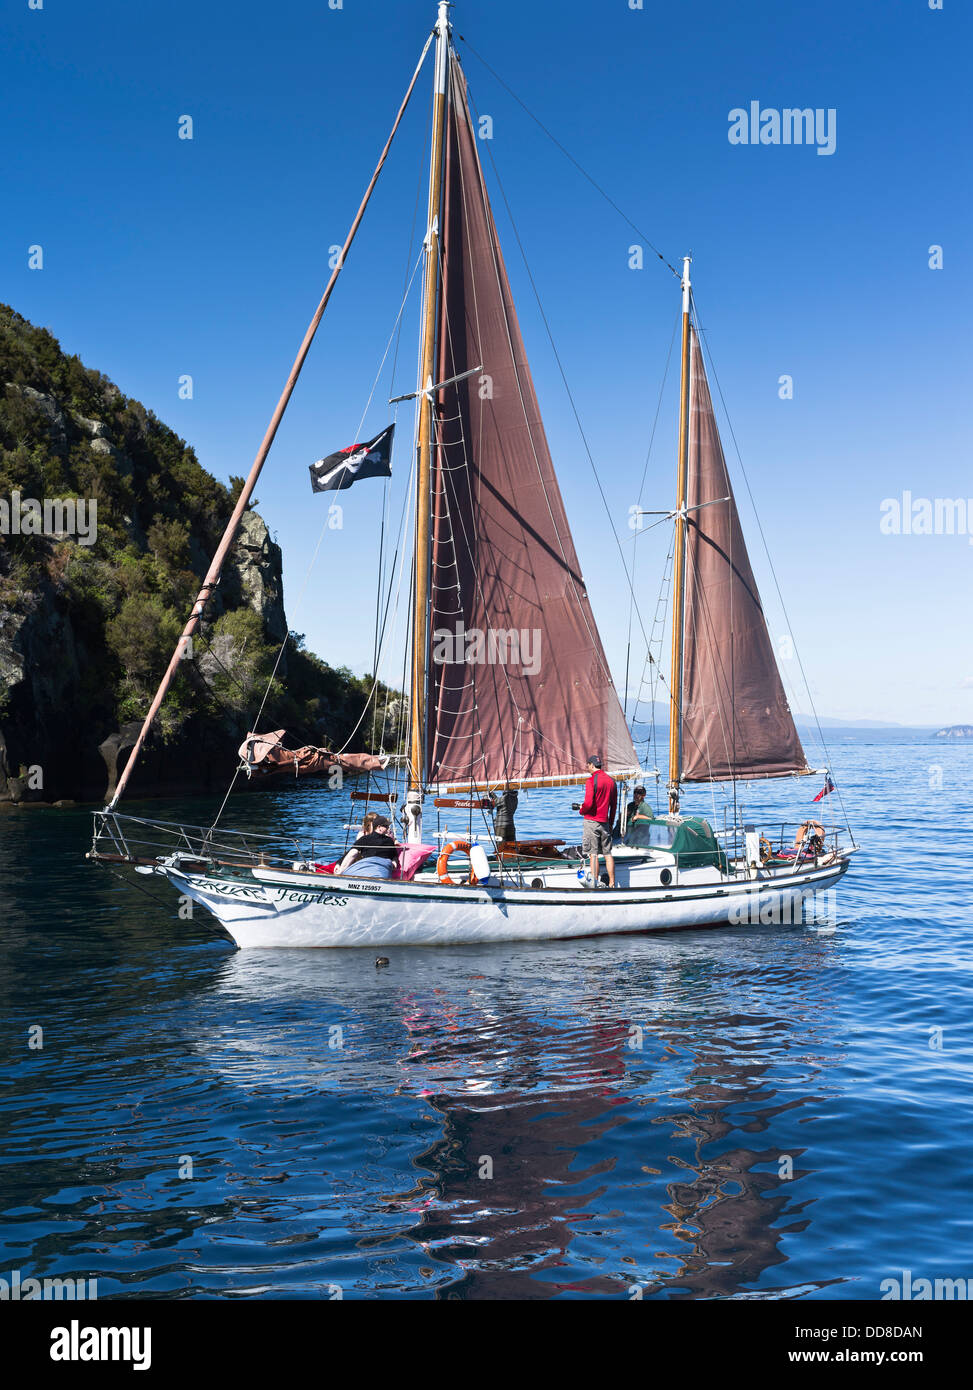 Dh offenes Segelboot See Taupo Neuseeland Yachtcharter reise Touristen touristische Stockfoto